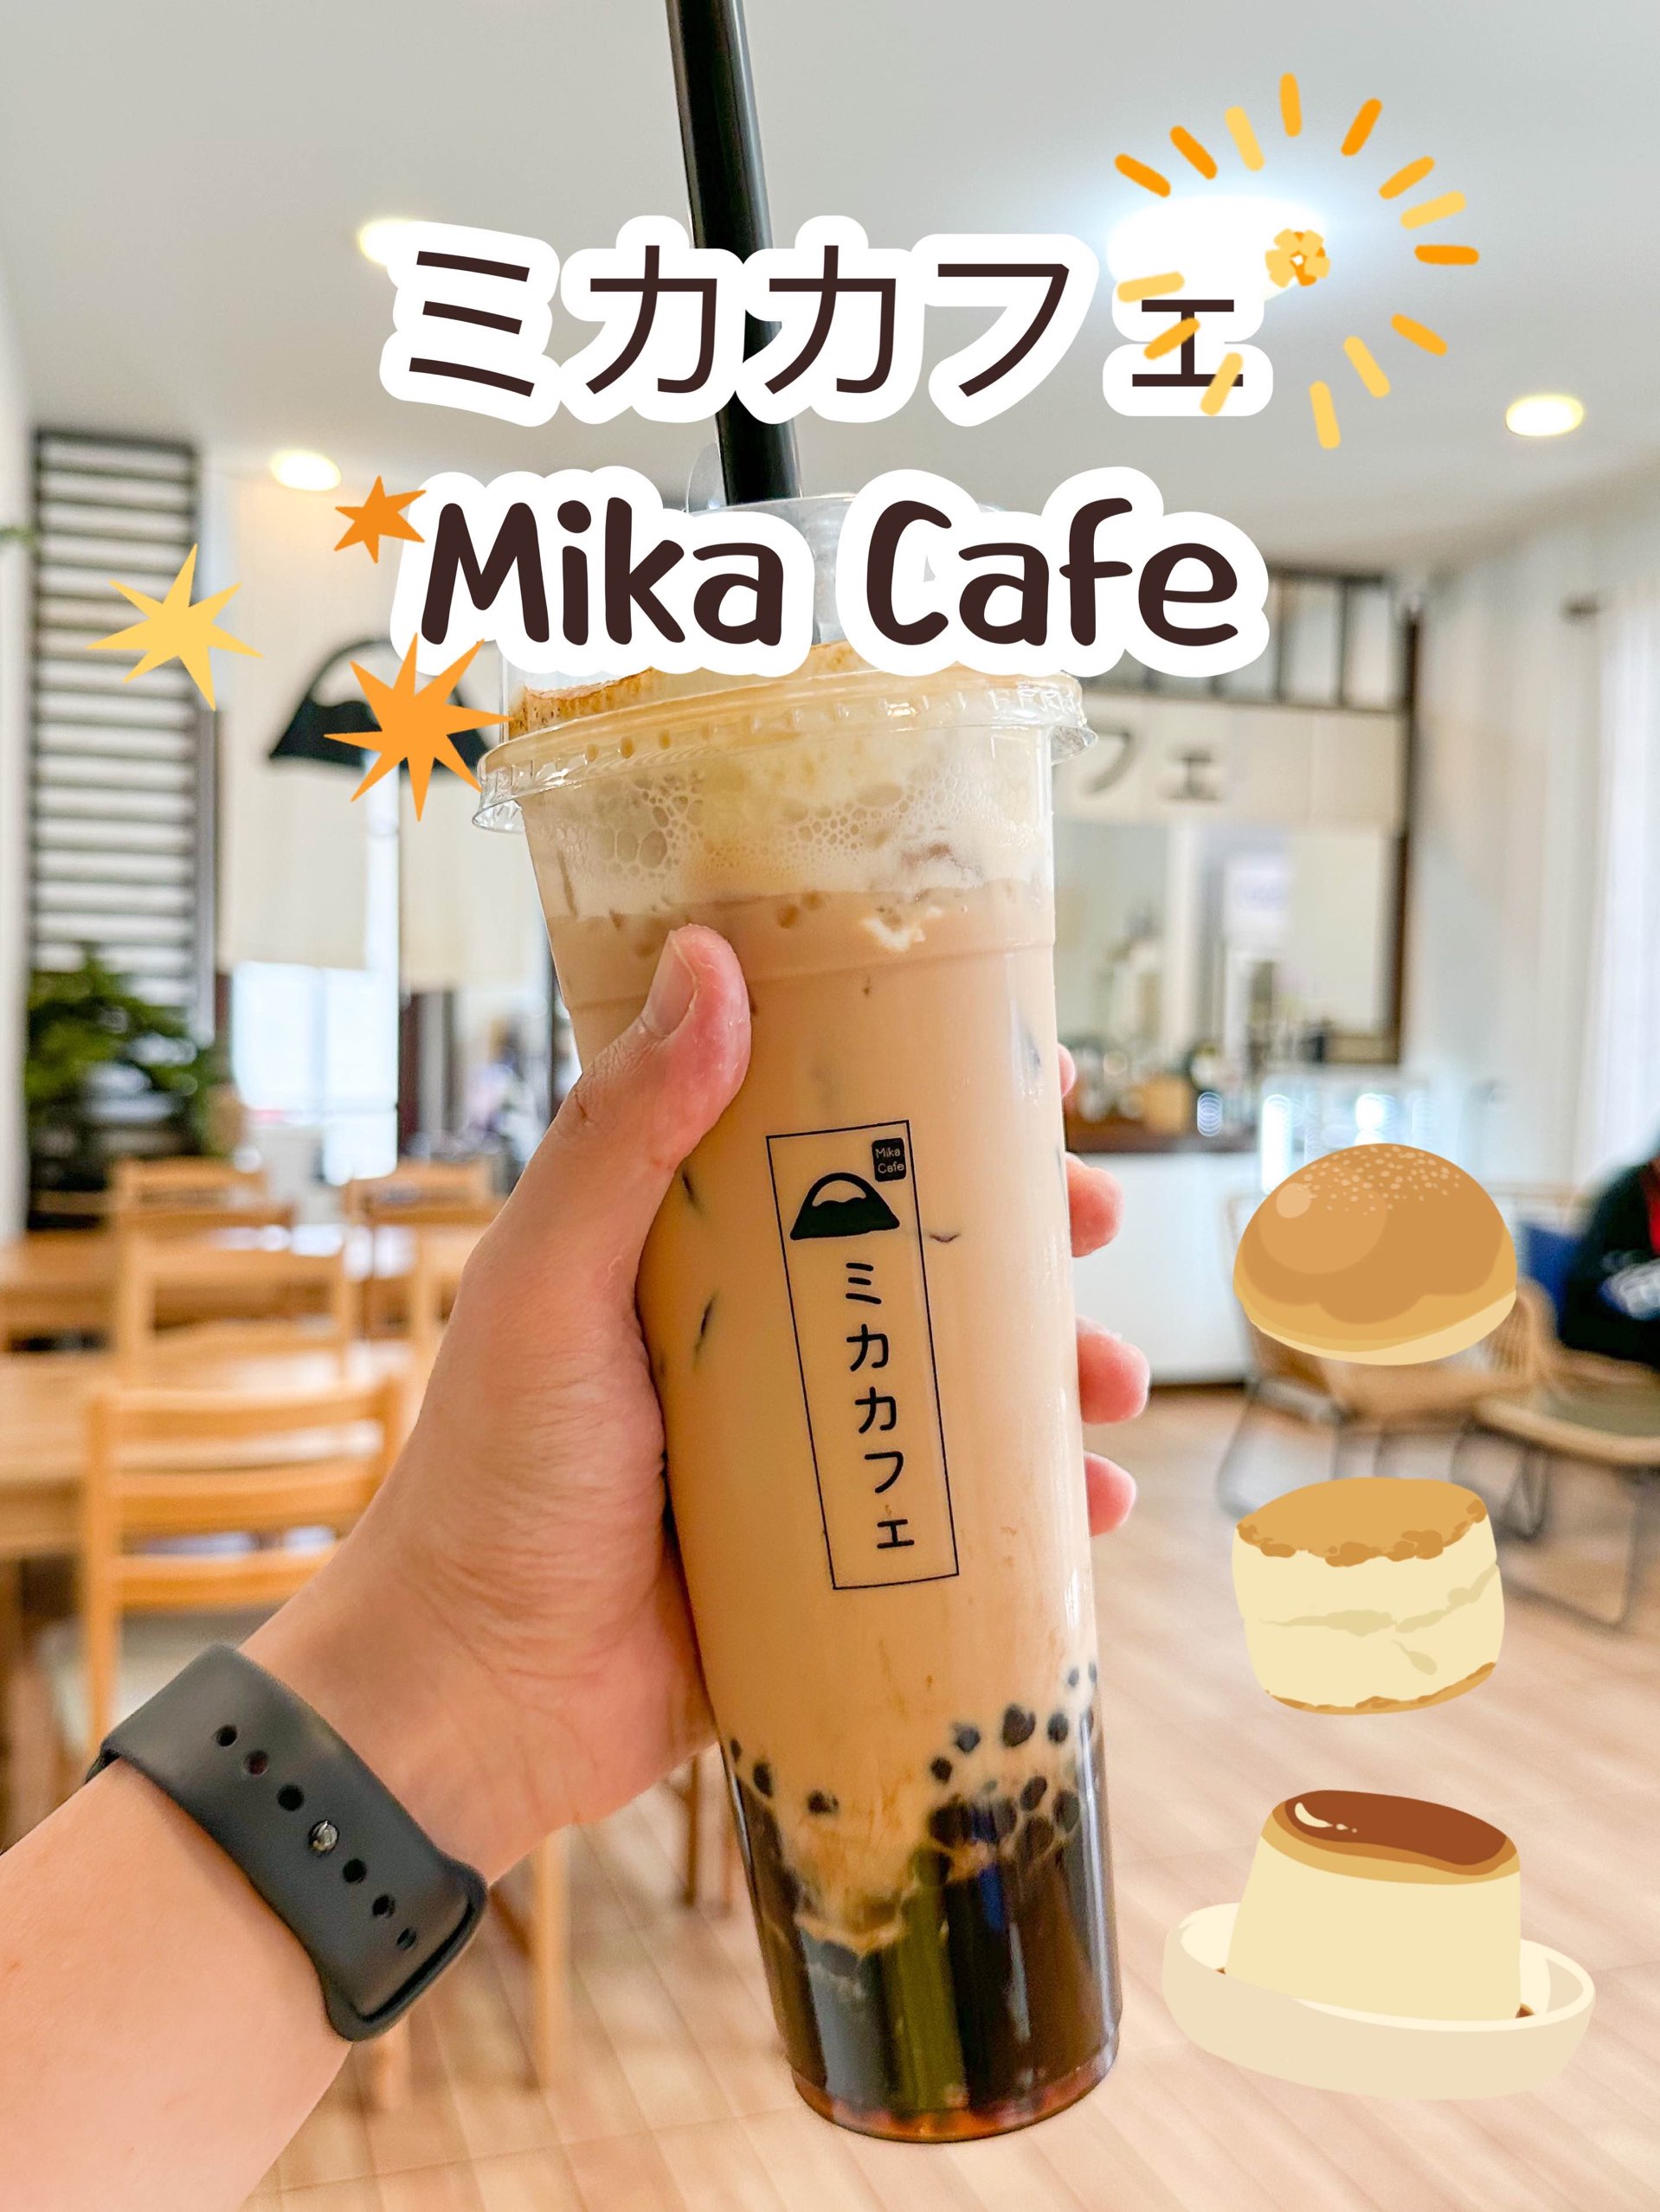 Mika Cafe (ミカカフェ)